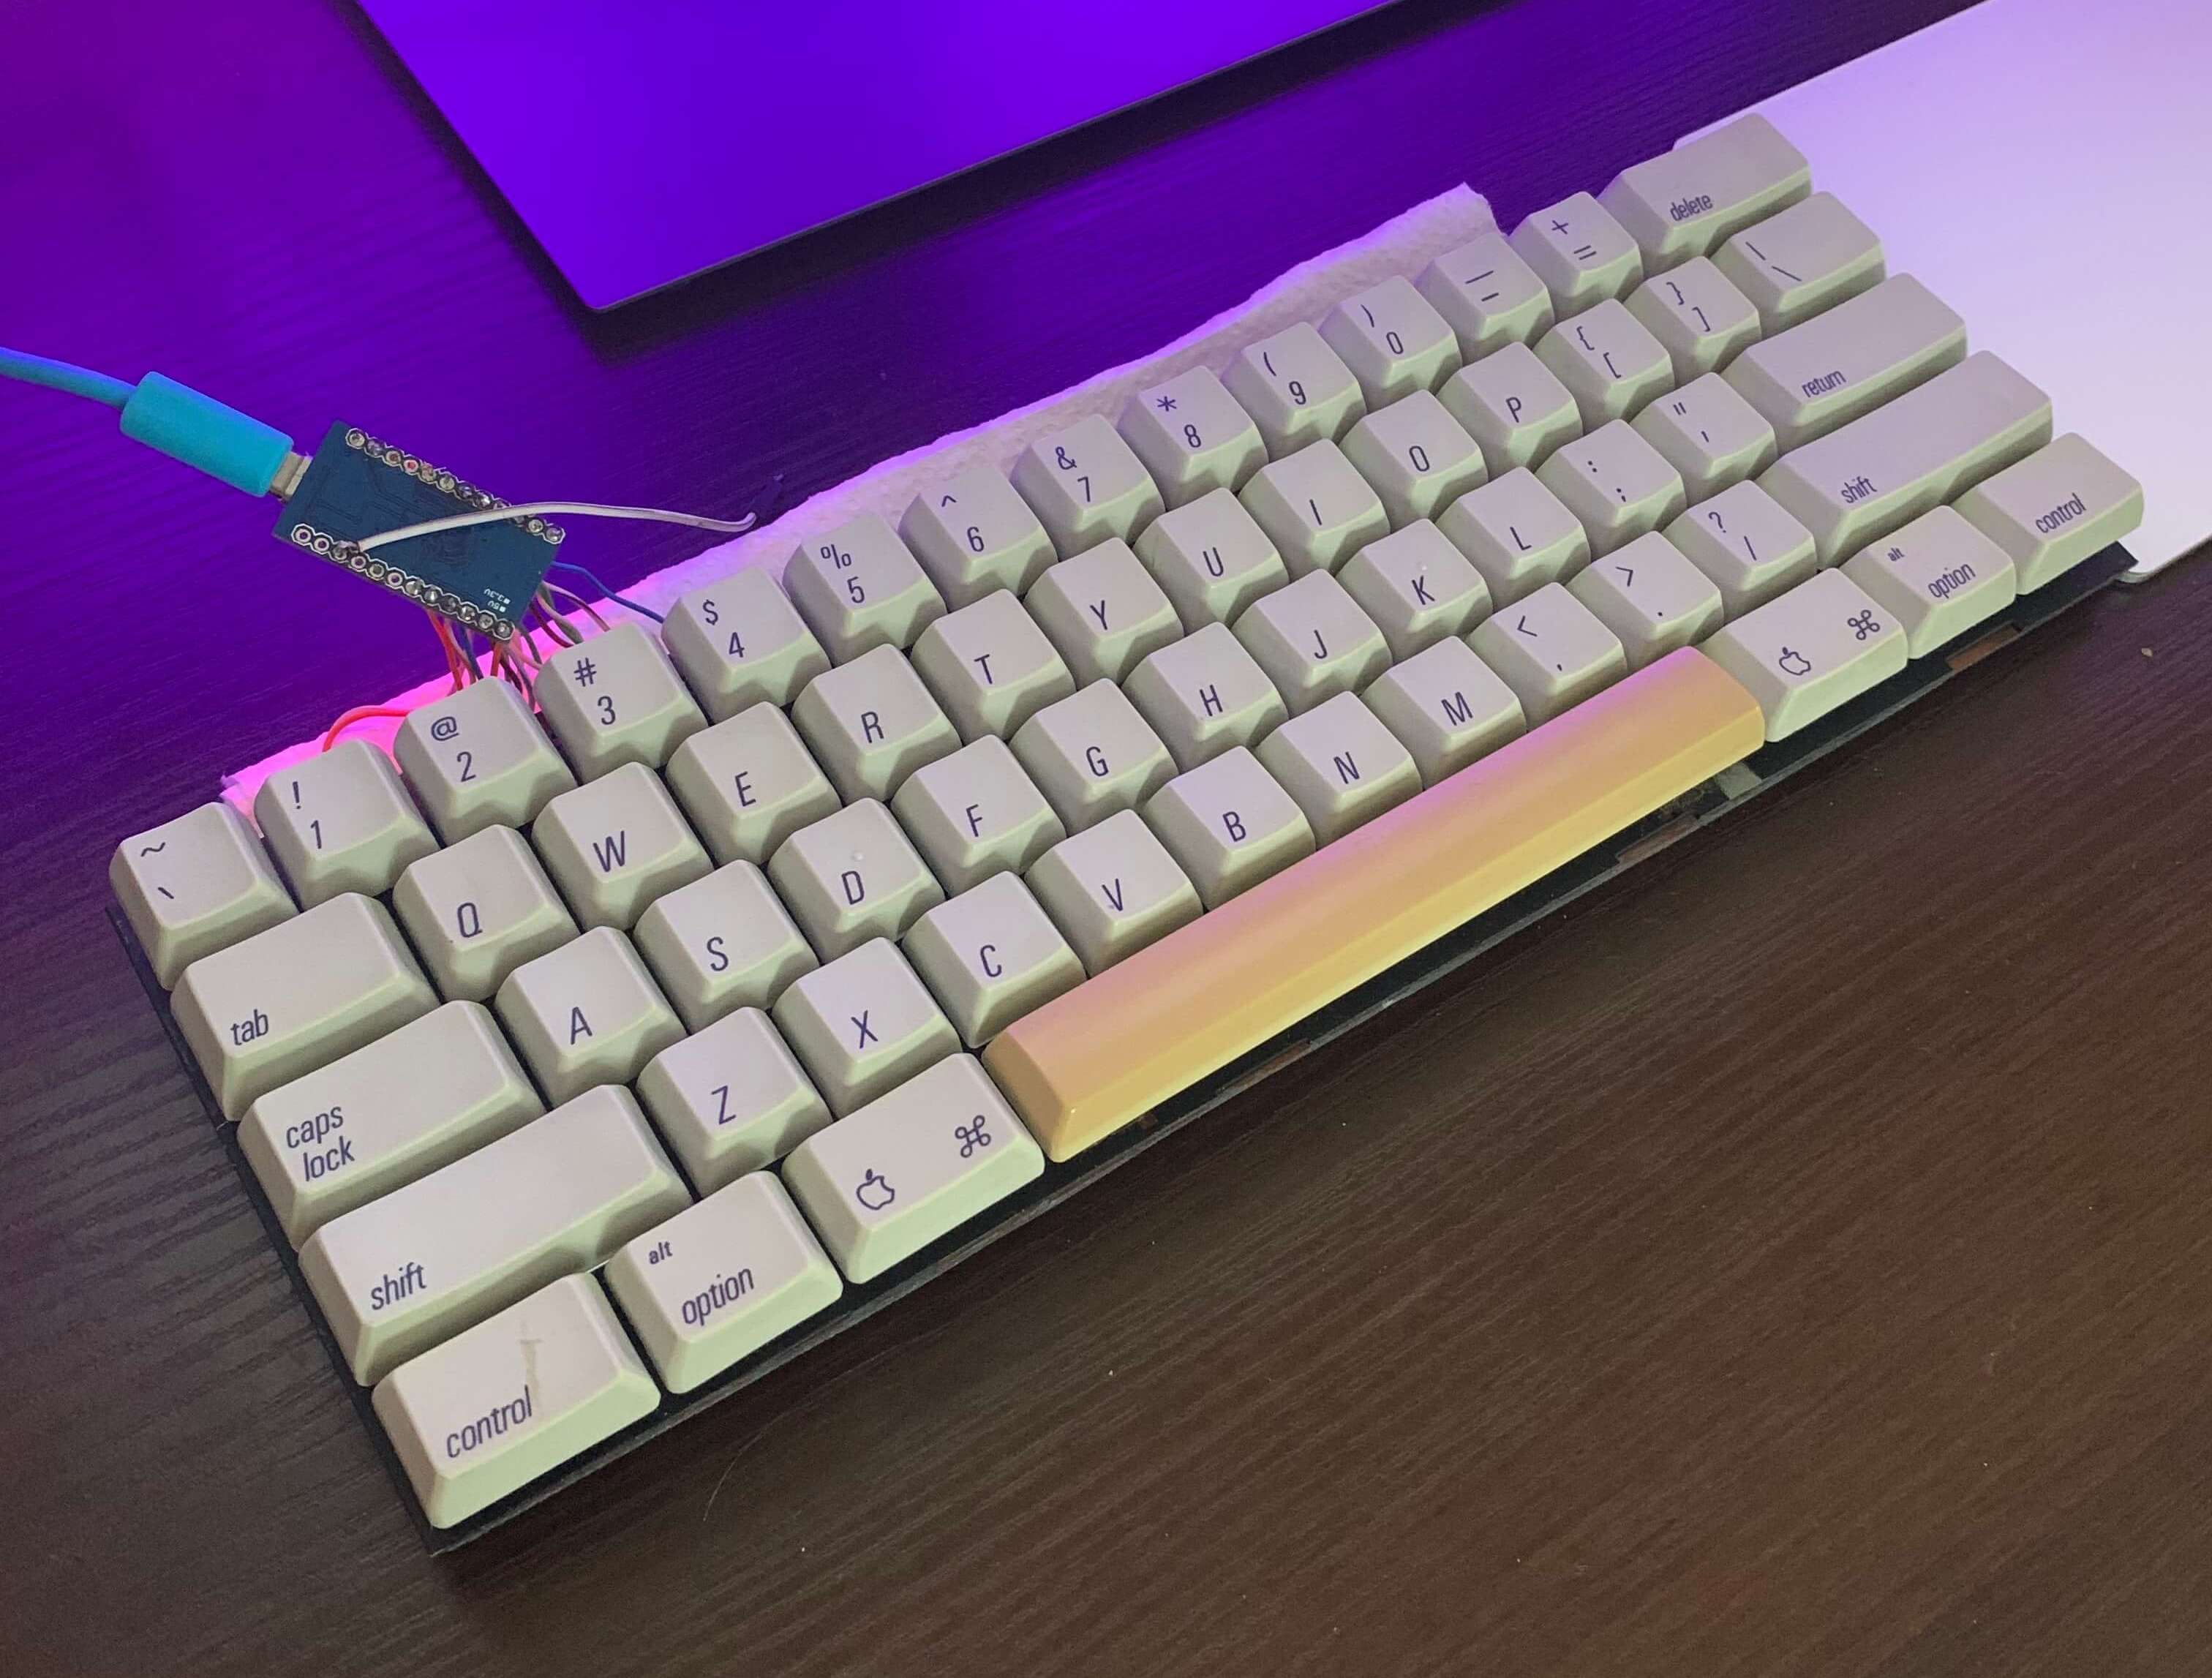 60% AEK alps64 keyboard